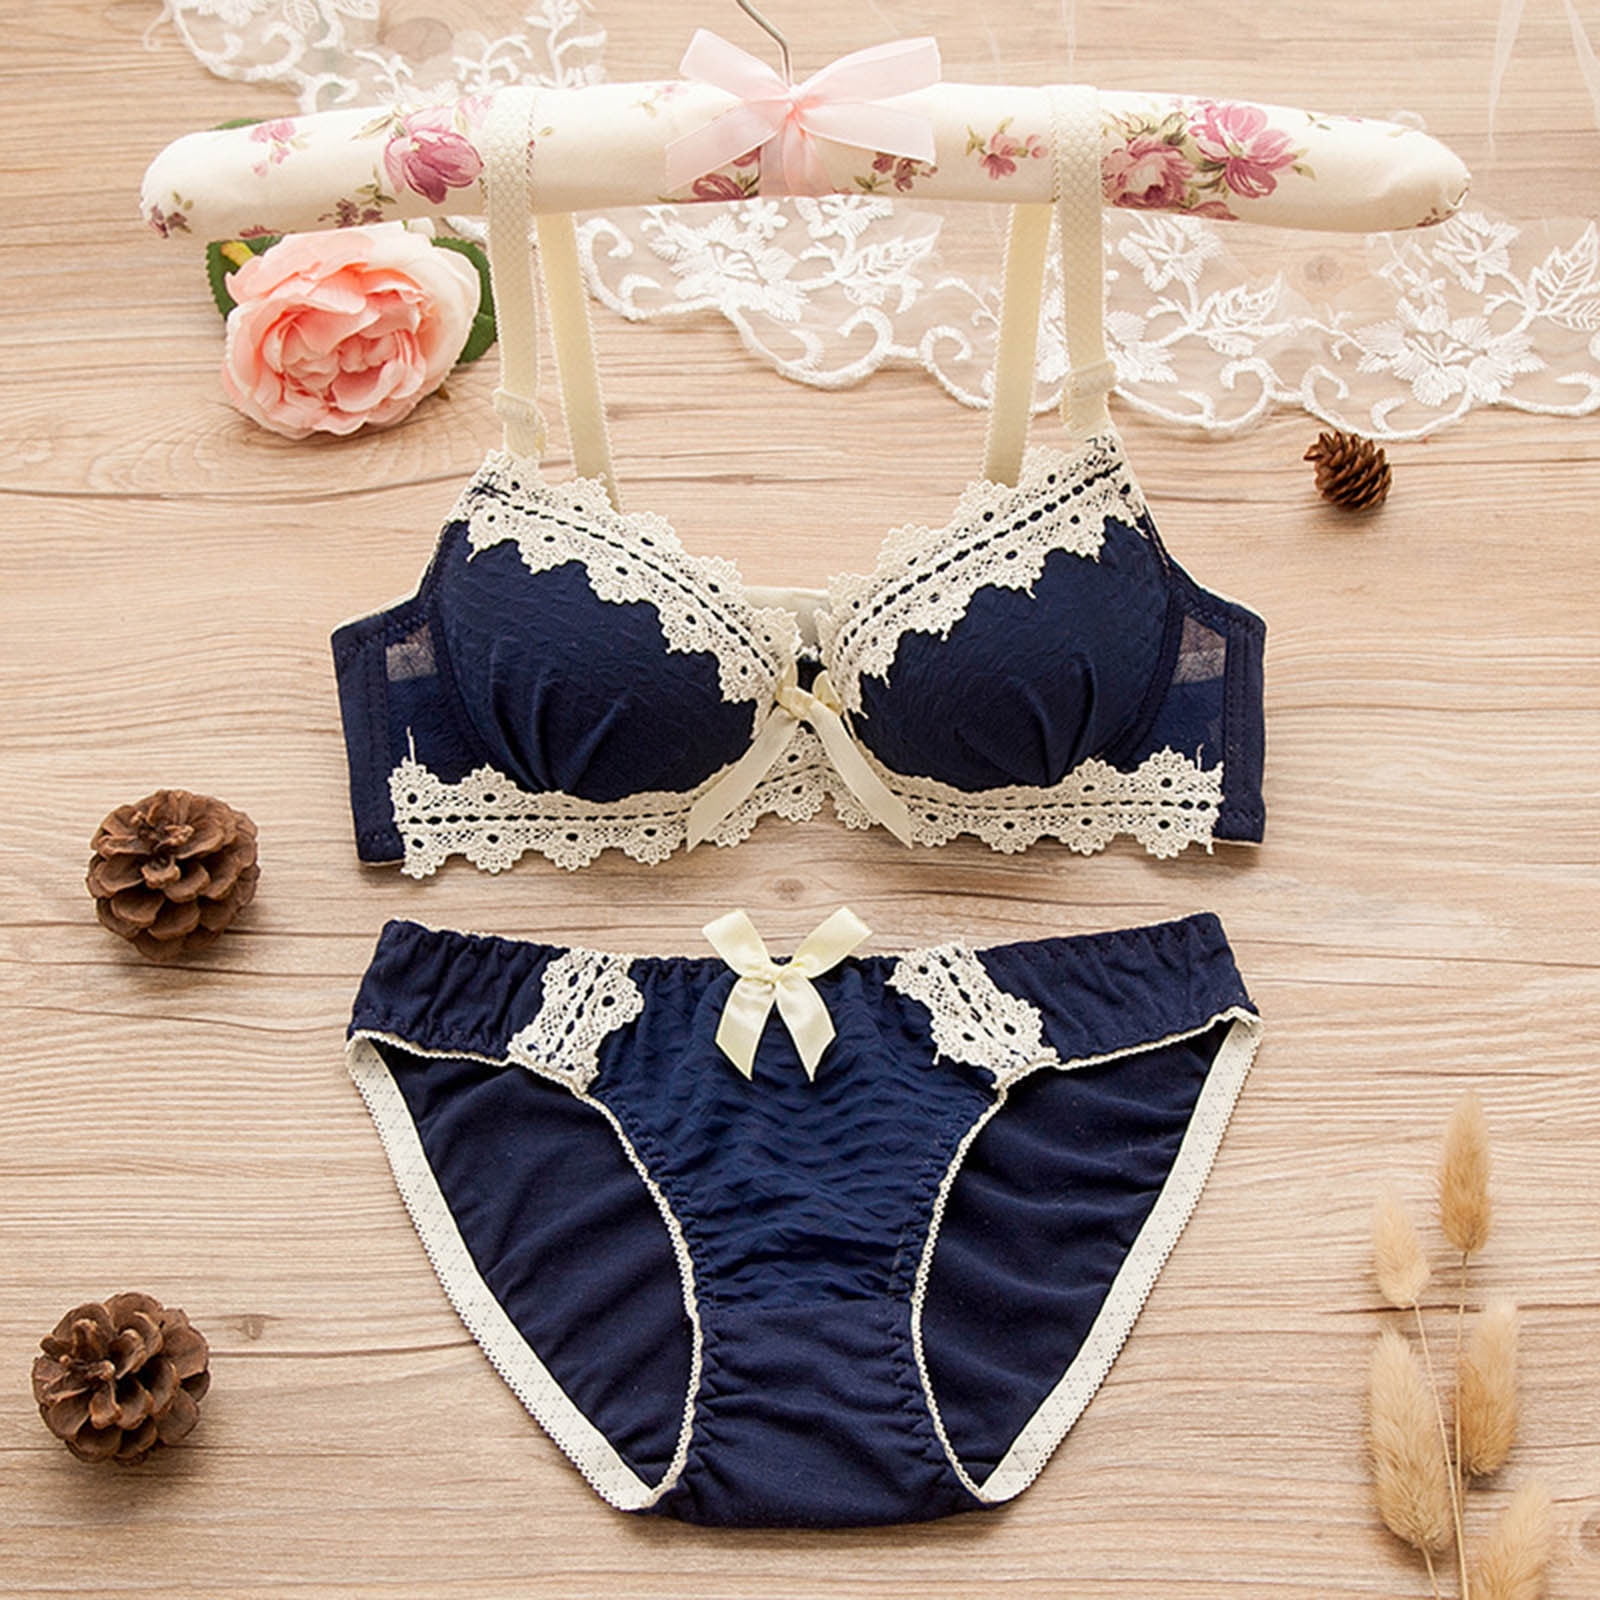 〖toto〗bra Brief Sets Bra For Women Soft Lace Lingerie Set See Through Underwear Floral Print